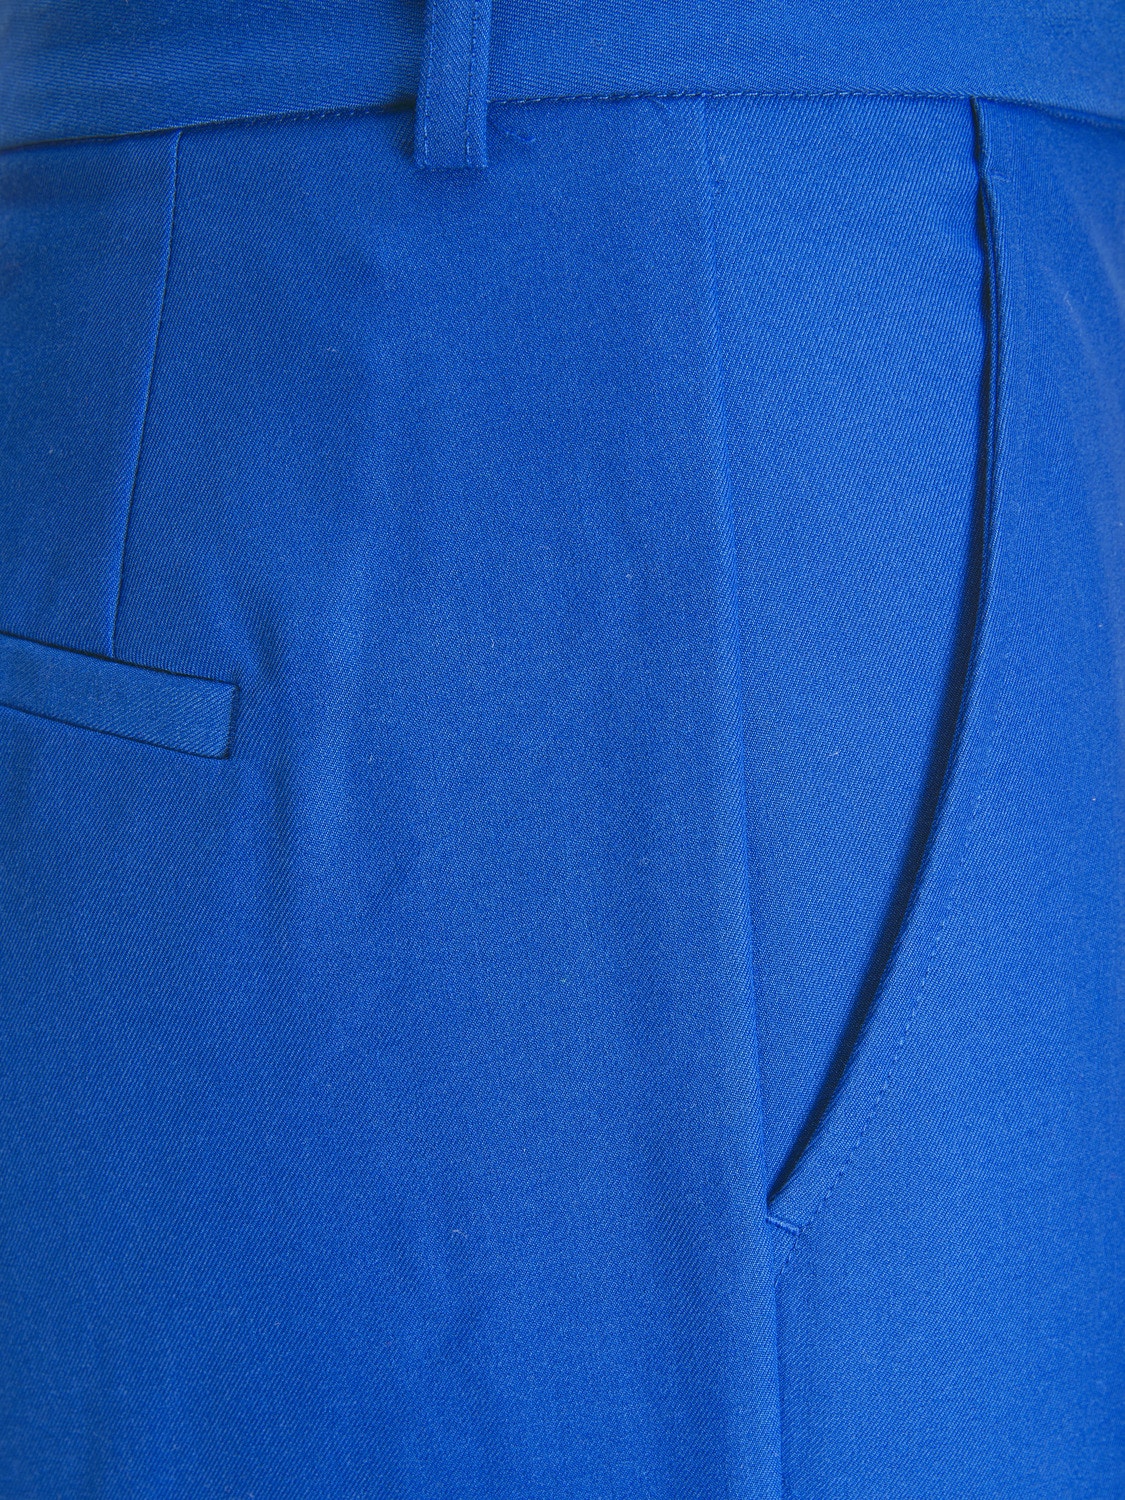 JJXX JXMARY Klasyczne spodnie -Blue Iolite - 12200674